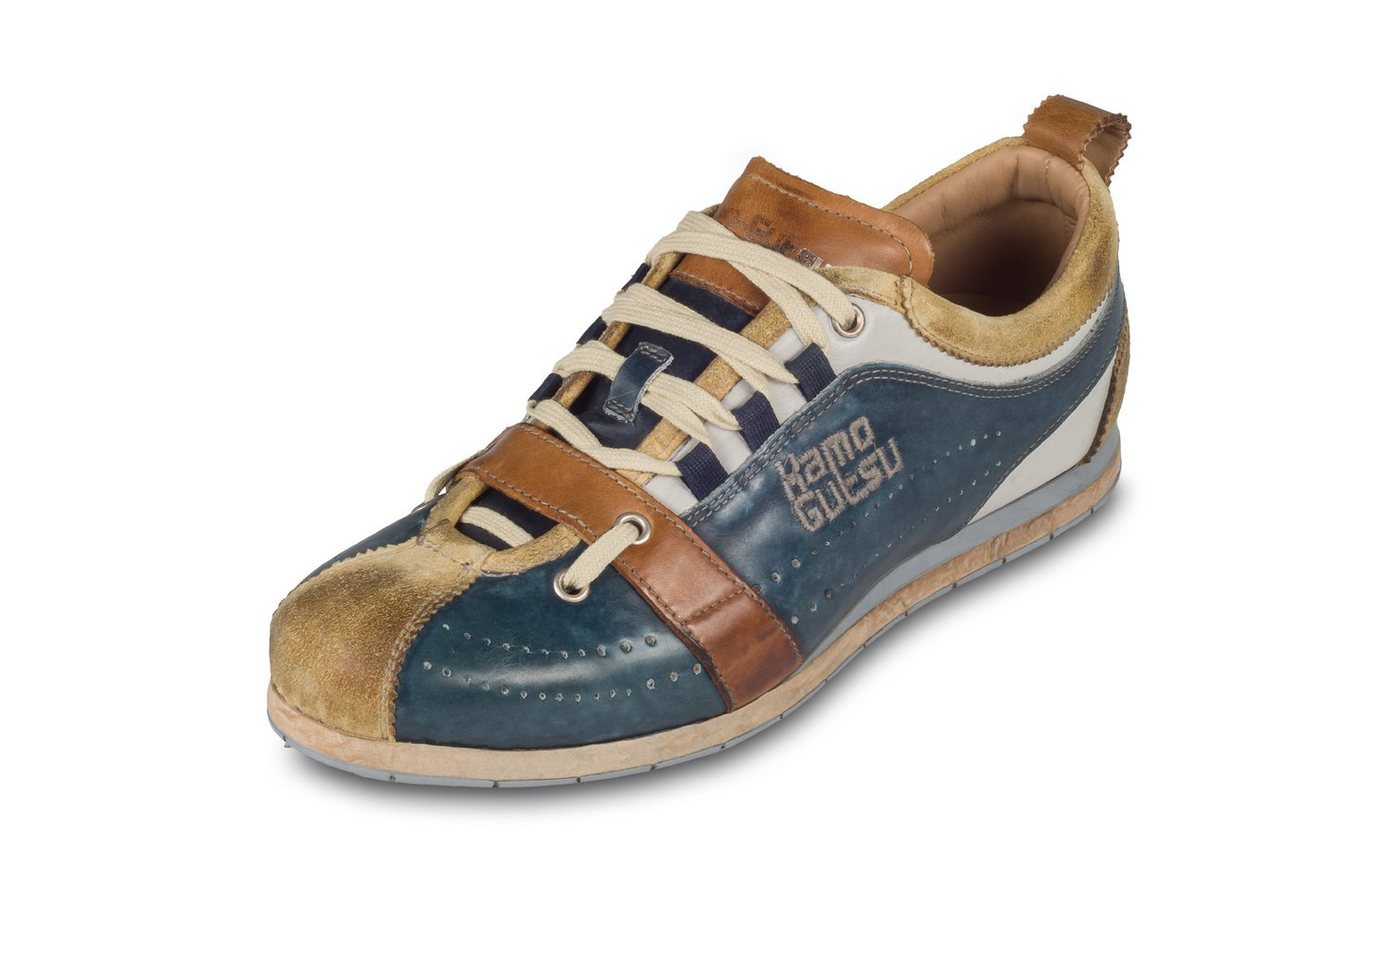 Kamo-Gutsu Sneaker blau/beige Retro (TIFO-017 miele & navy stone washed) Sneaker Handgefertigt in Italien von Kamo-Gutsu